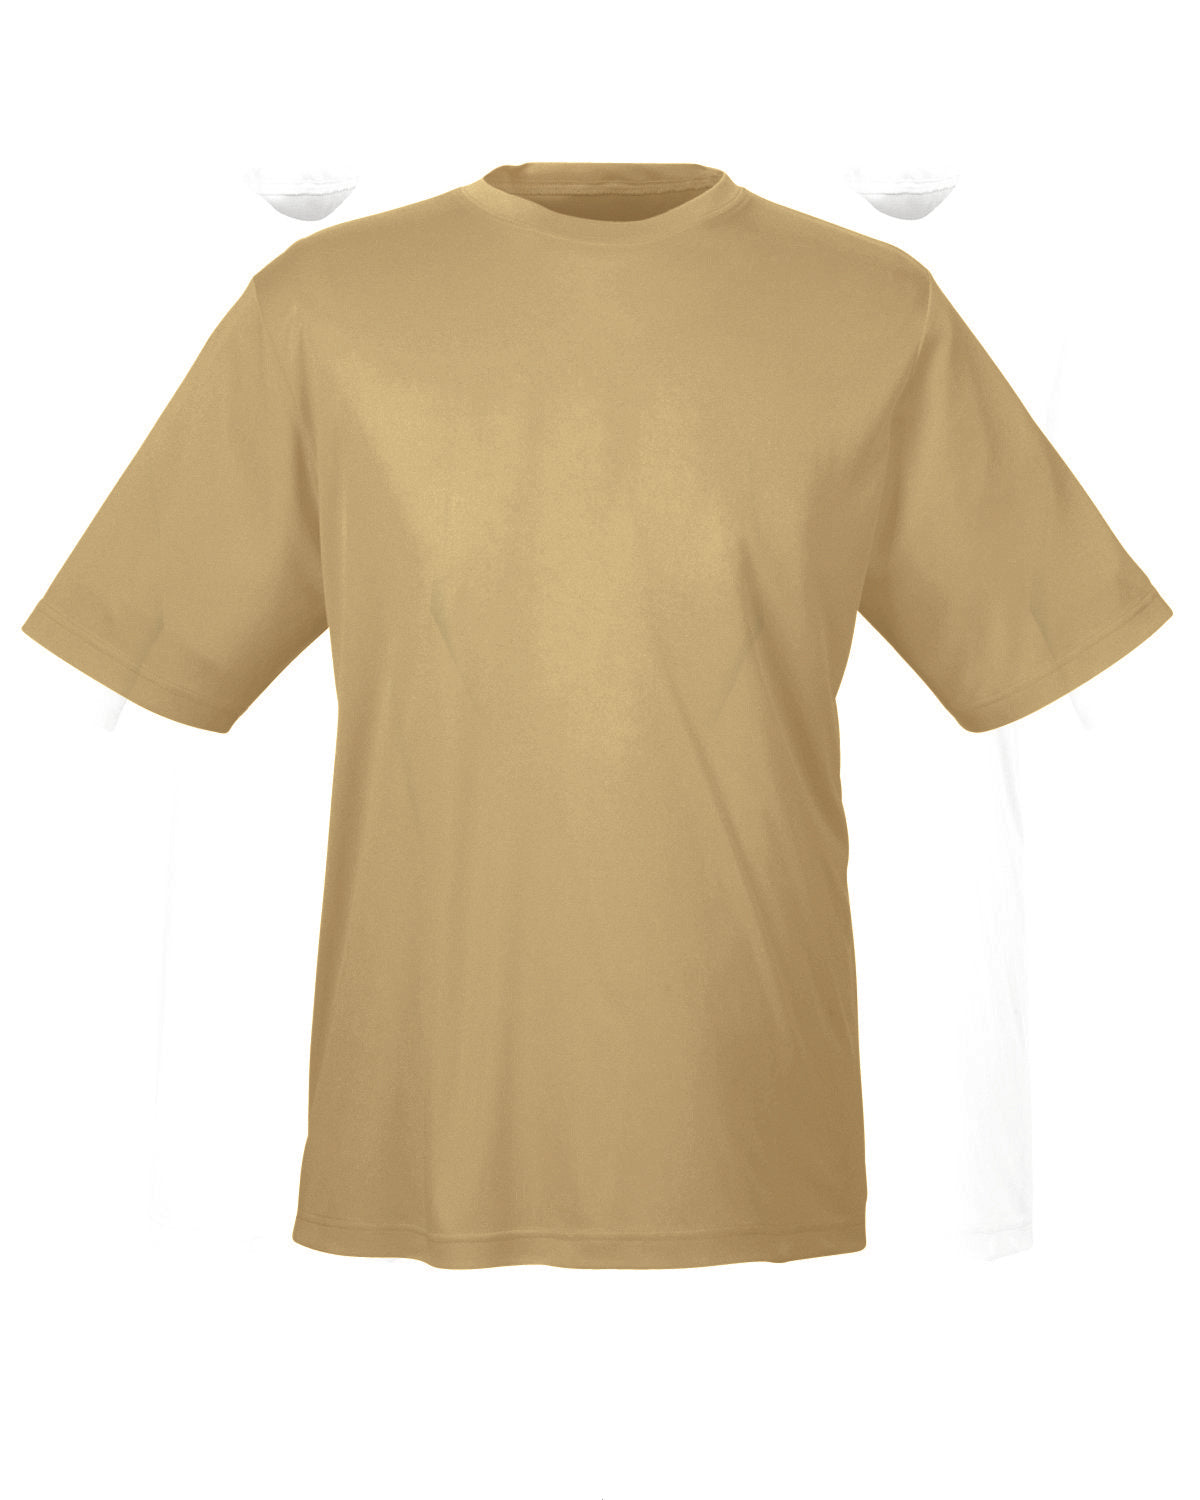 Test Dryfit Shirt